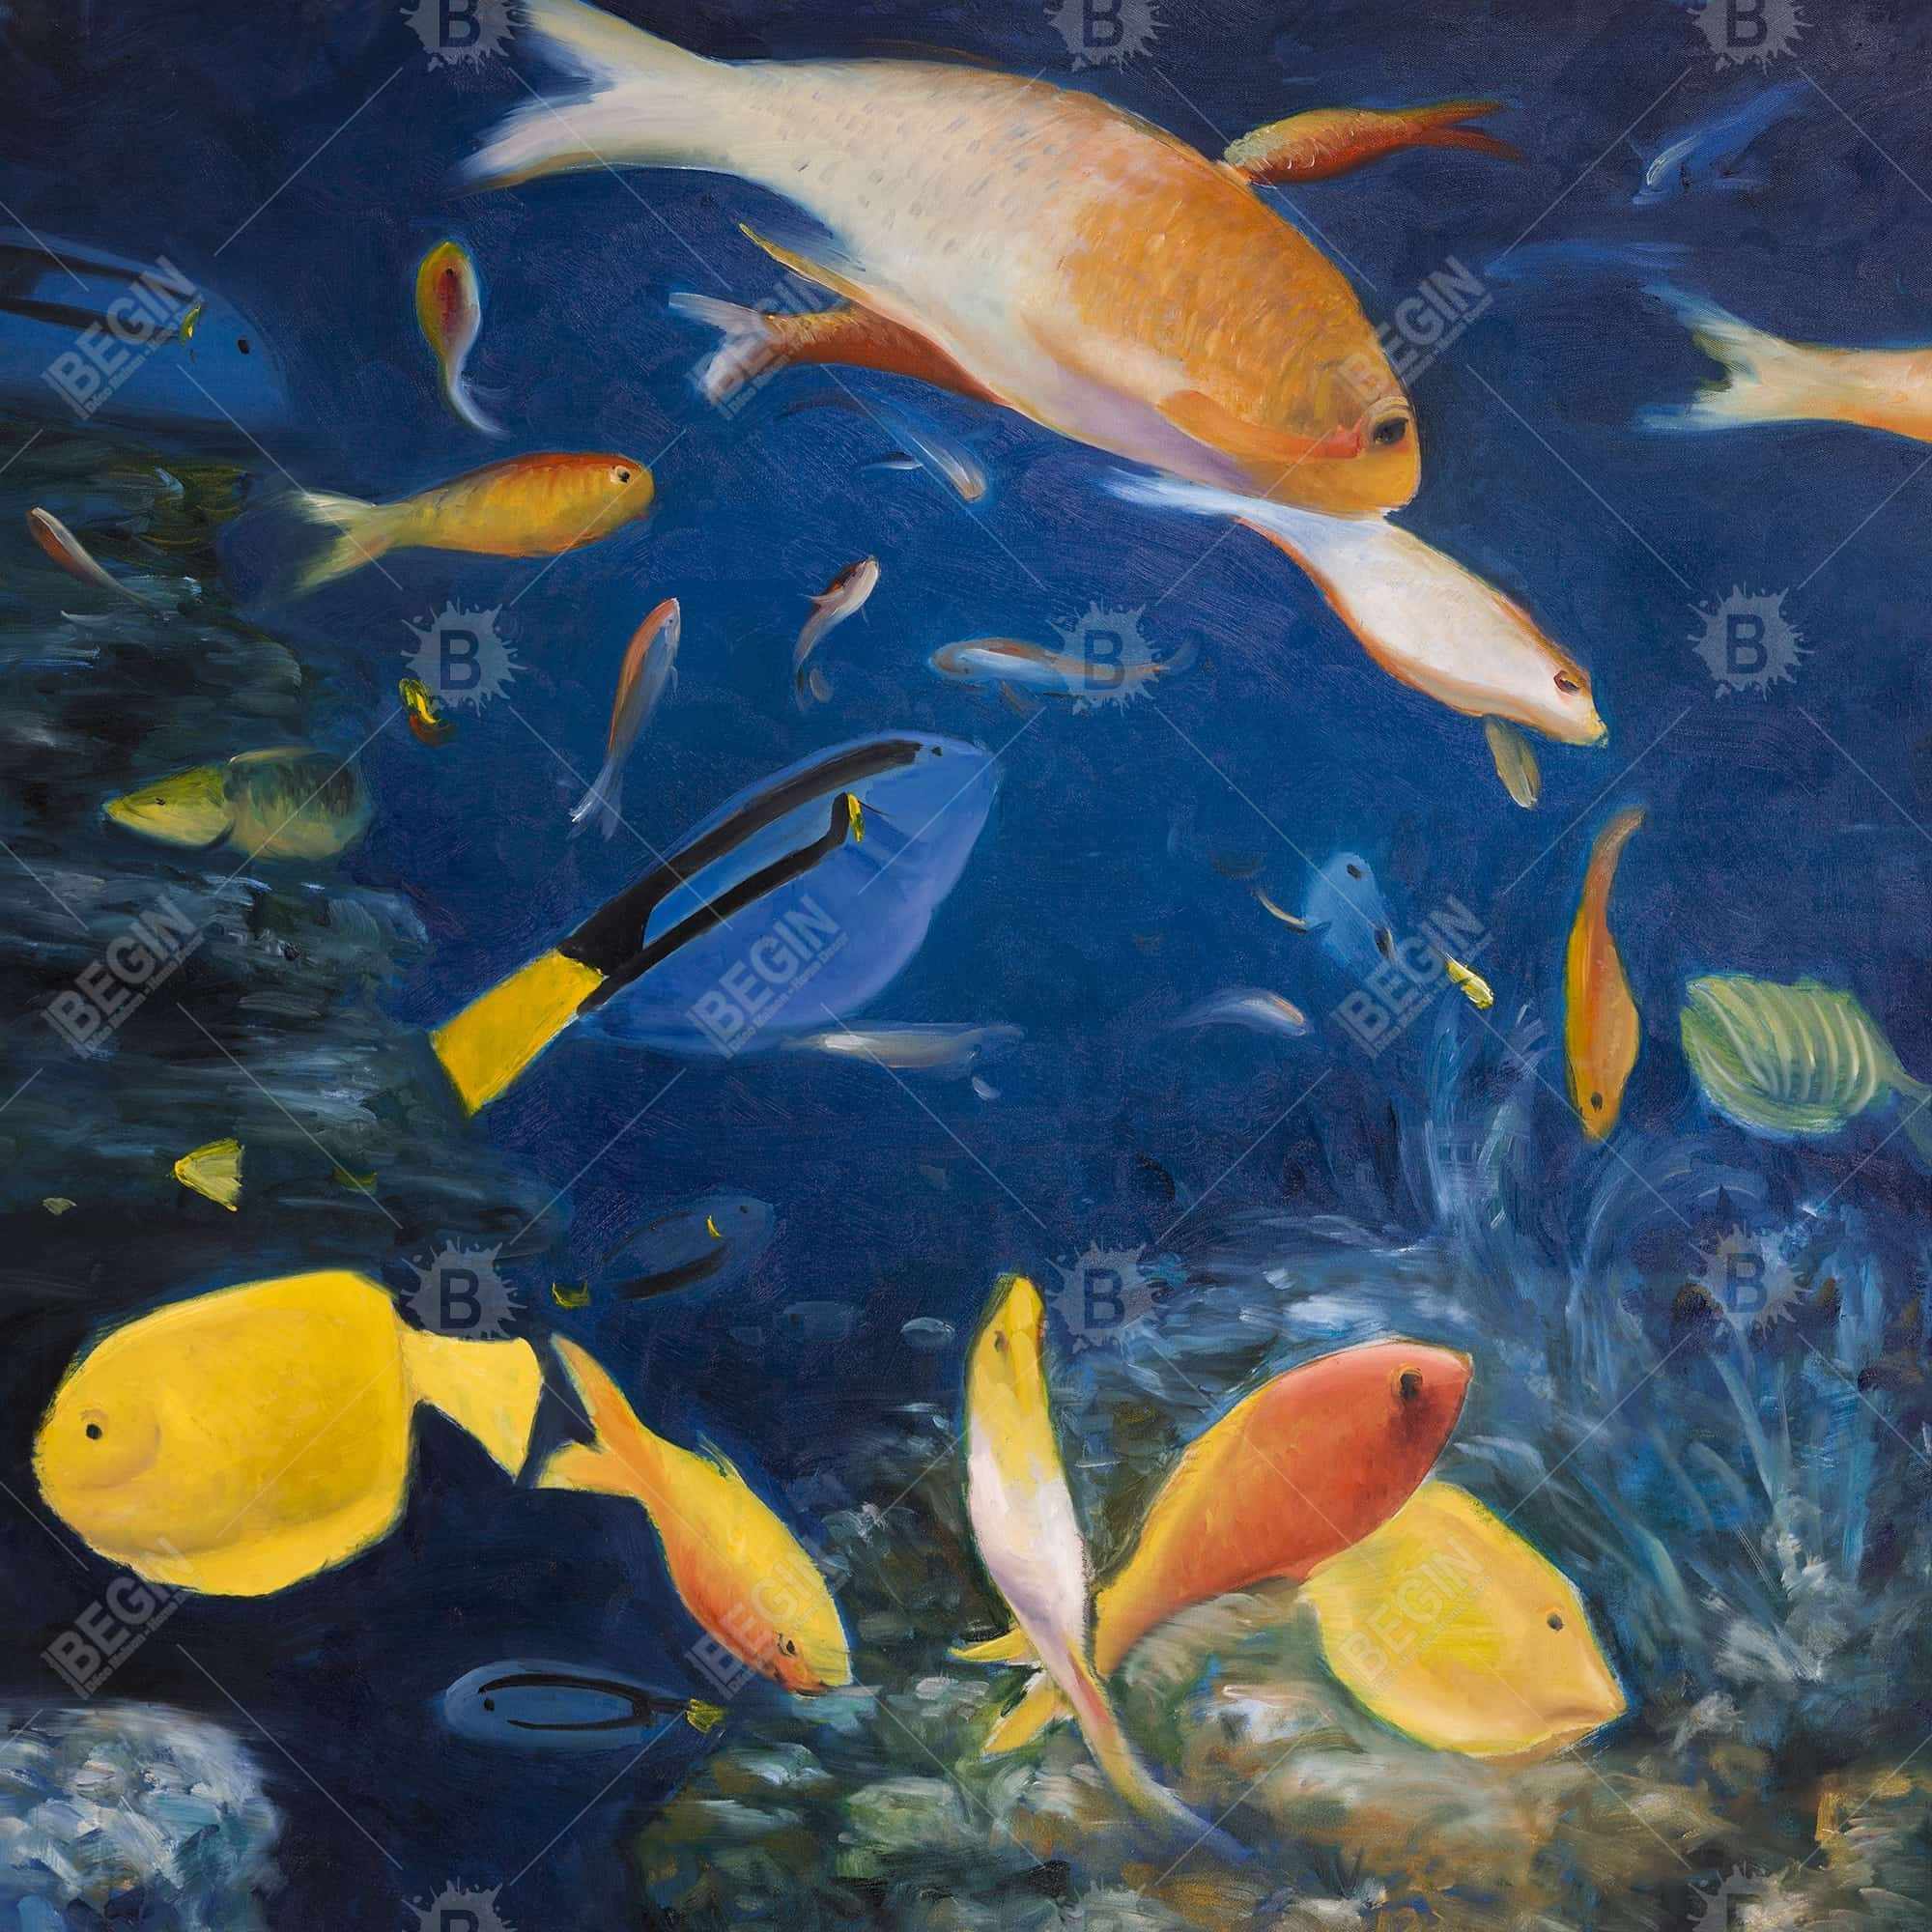 Colorful fish under the sea